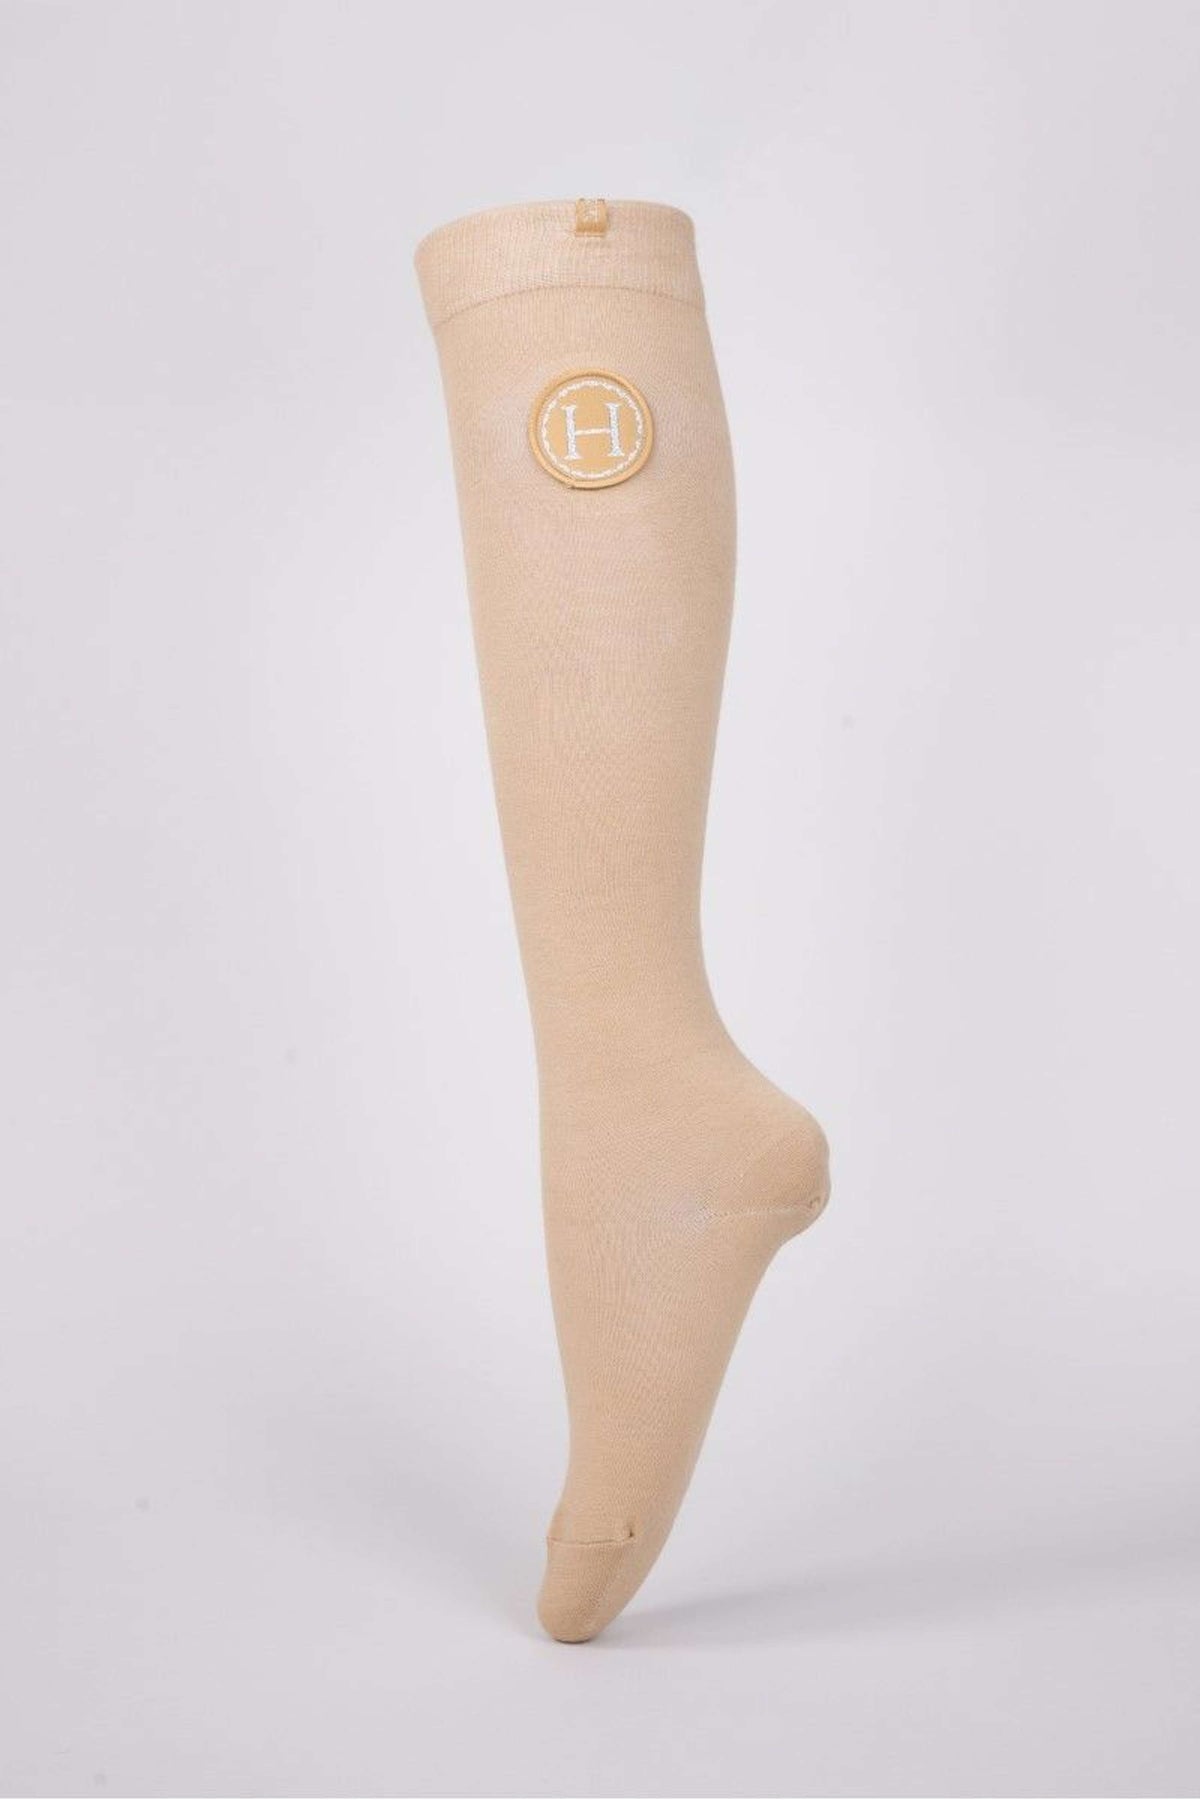 Harcour Socken Sorel Jouy/Navy/Sand